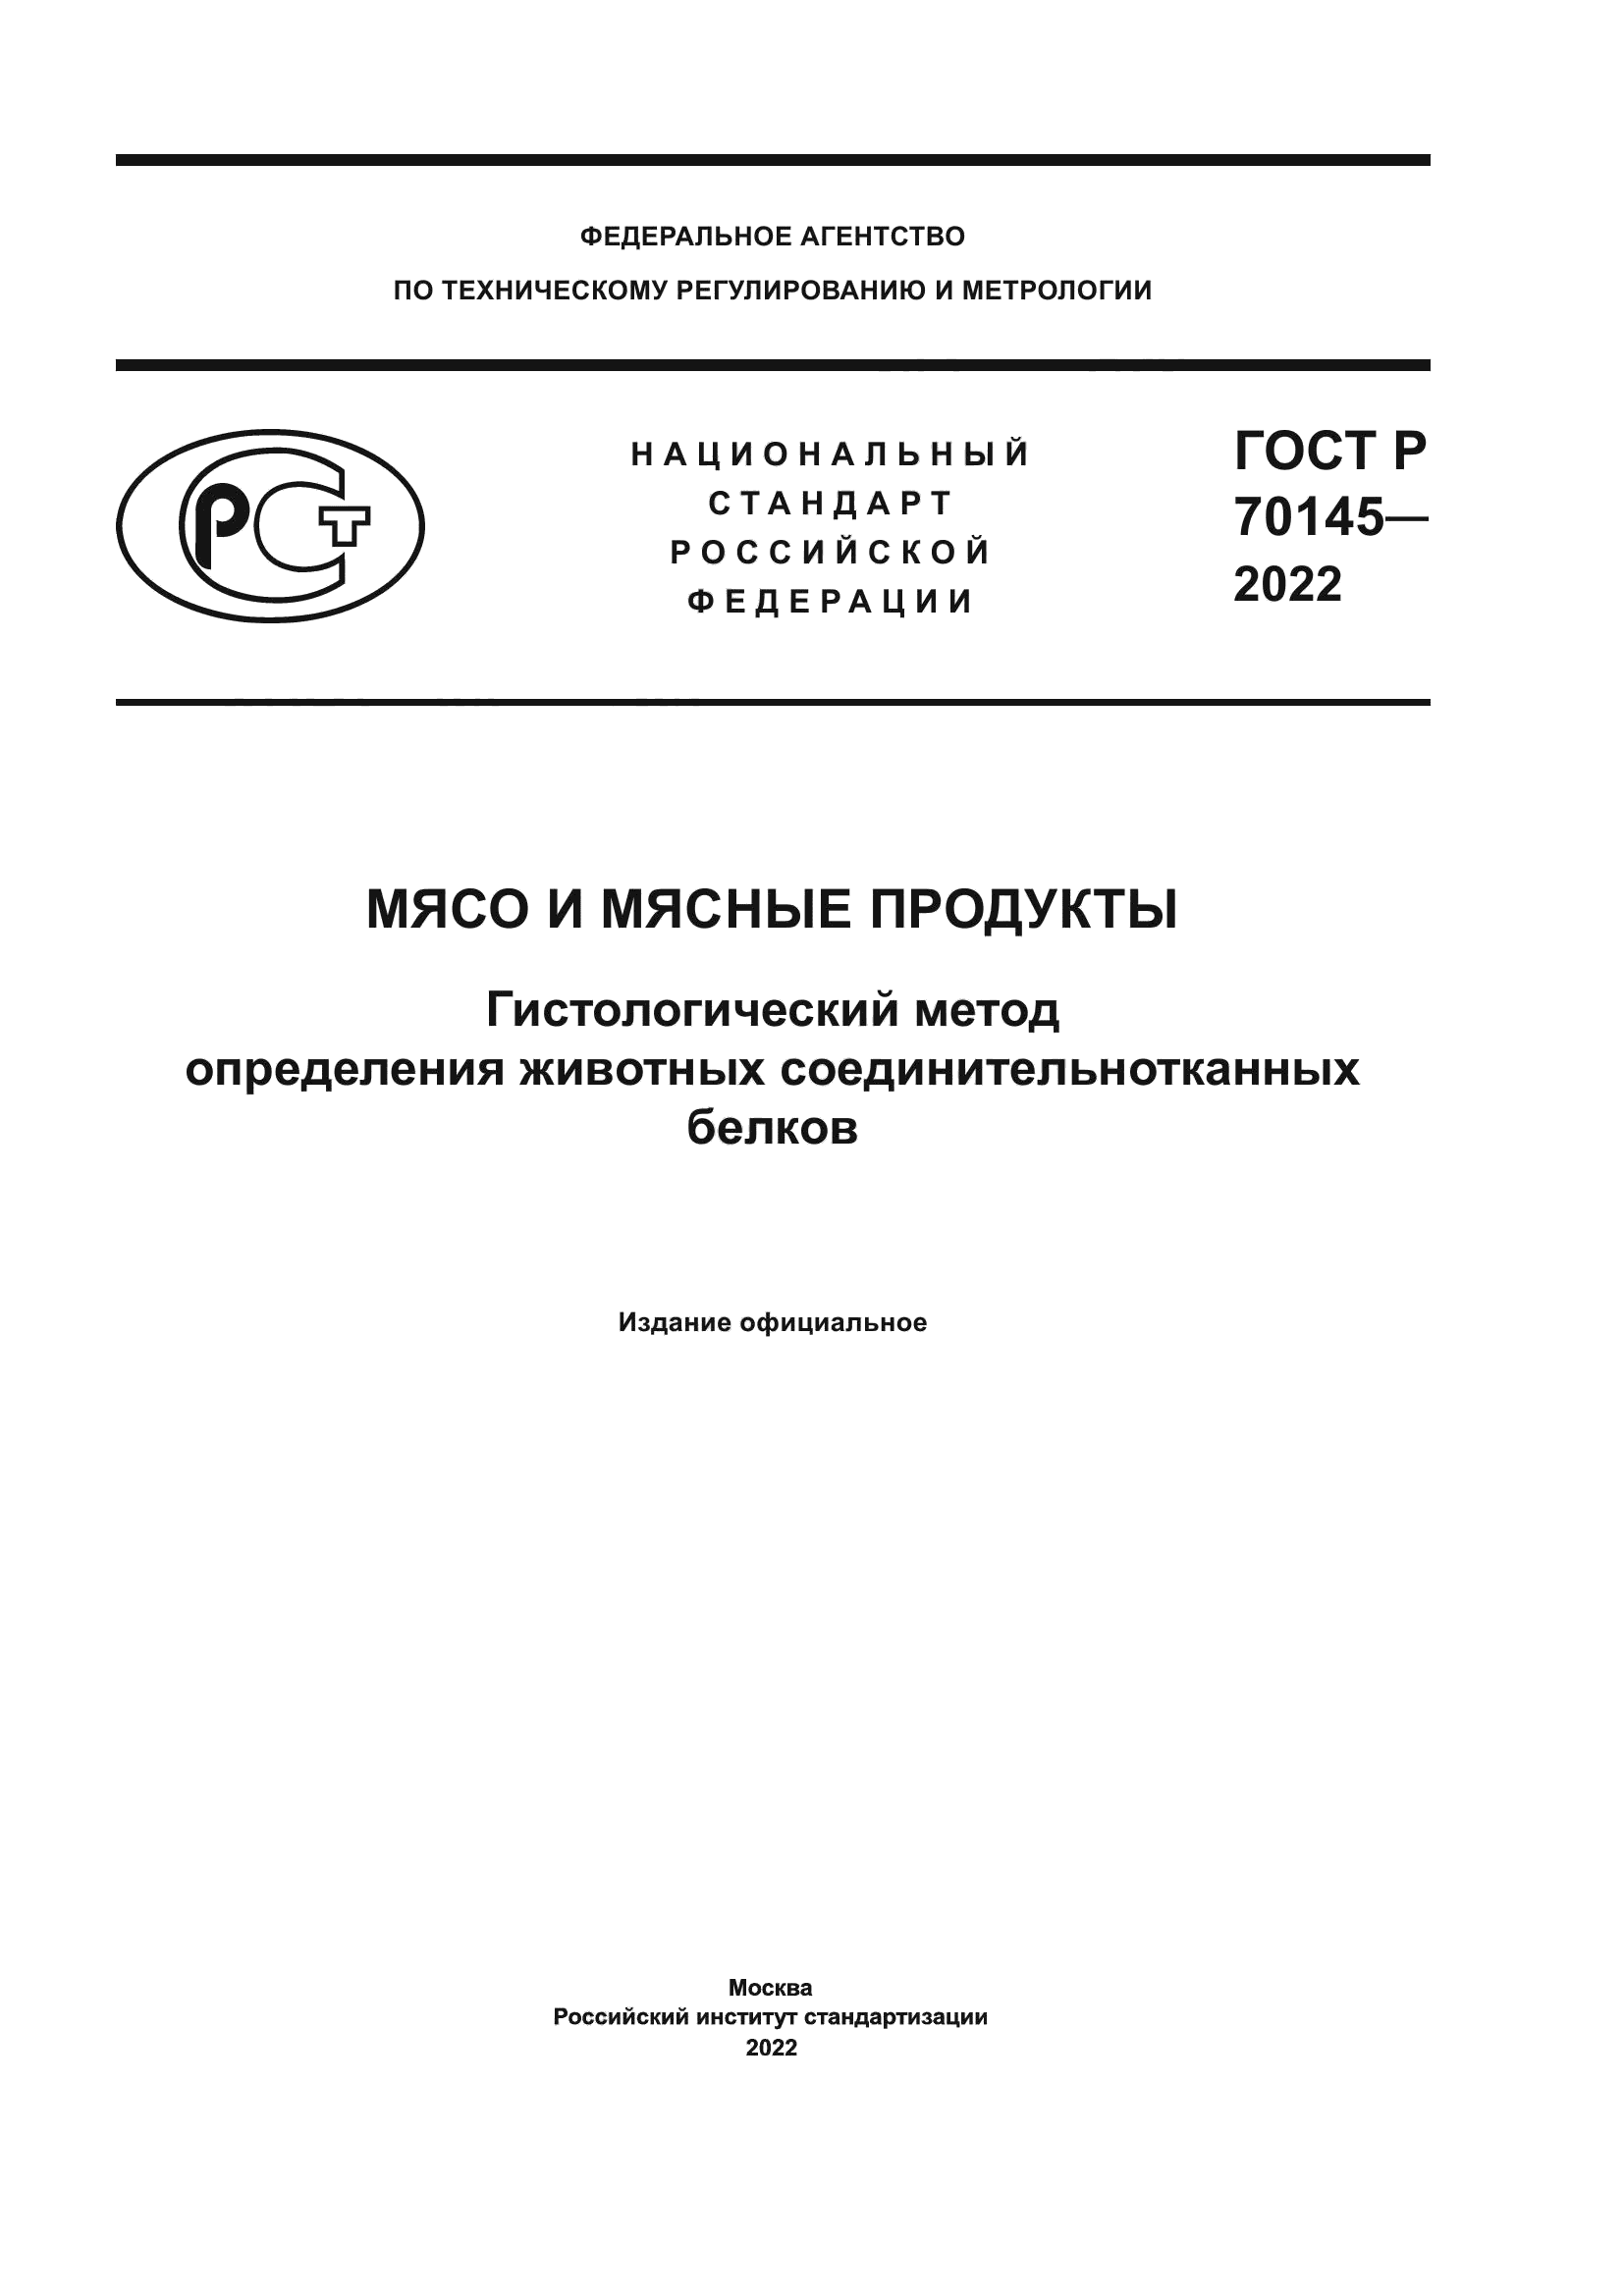 ГОСТ Р 70145-2022